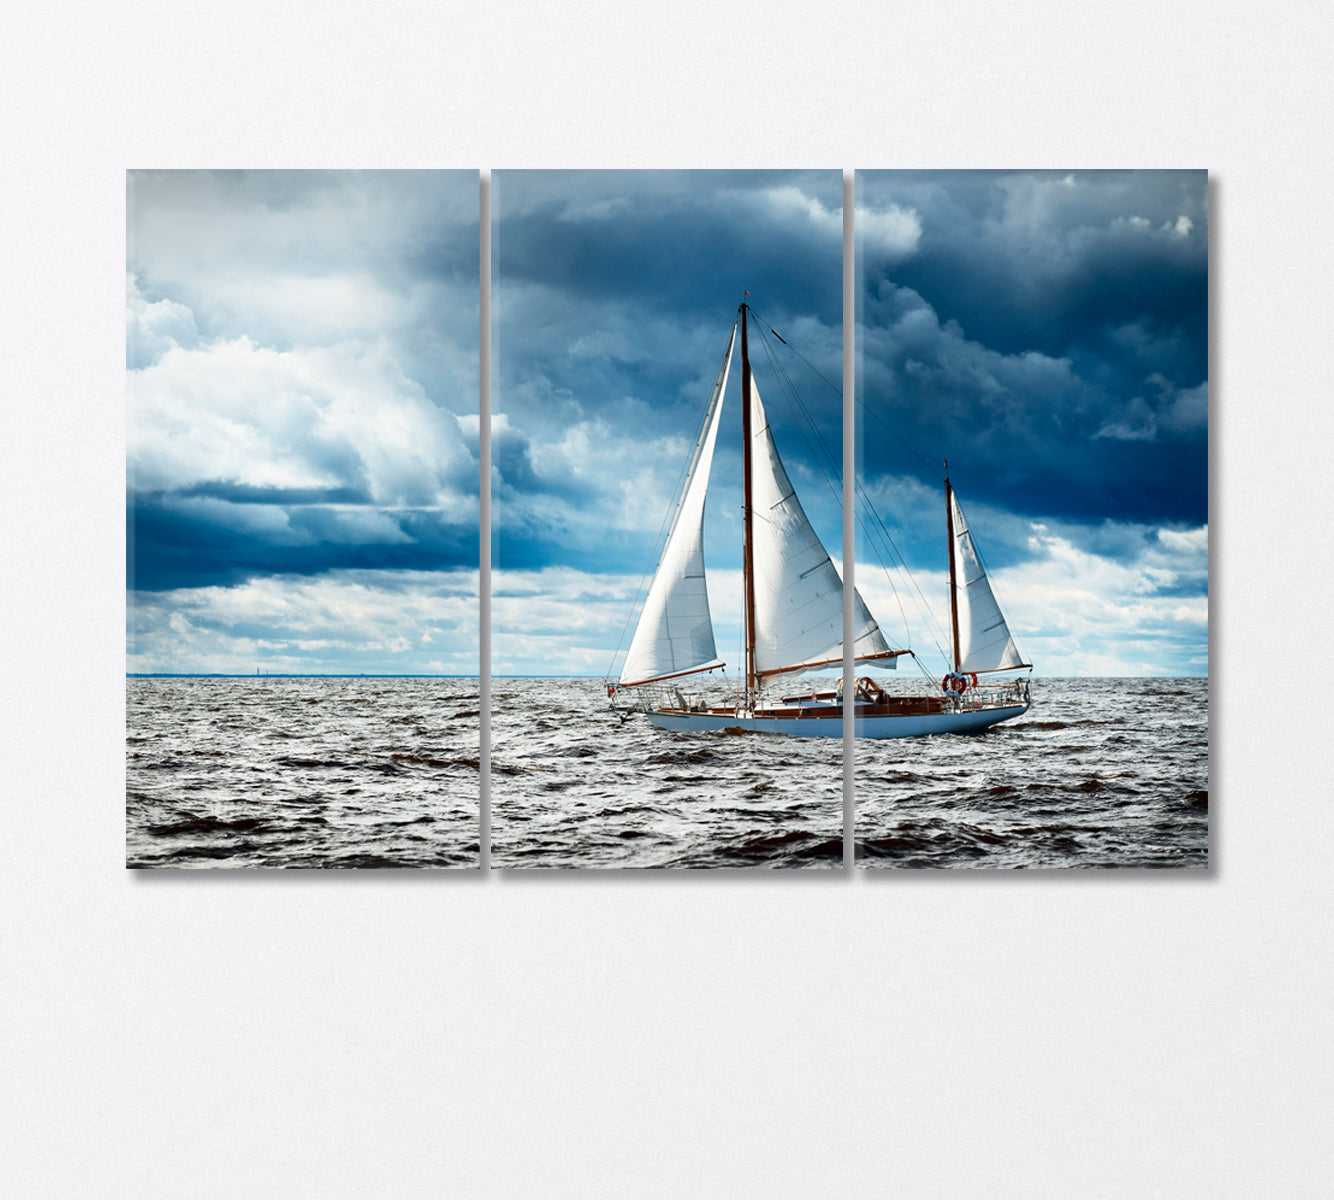 Vintage Wooden Sailboat in Opensea Canvas Print-Canvas Print-CetArt-3 Panels-36x24 inches-CetArt